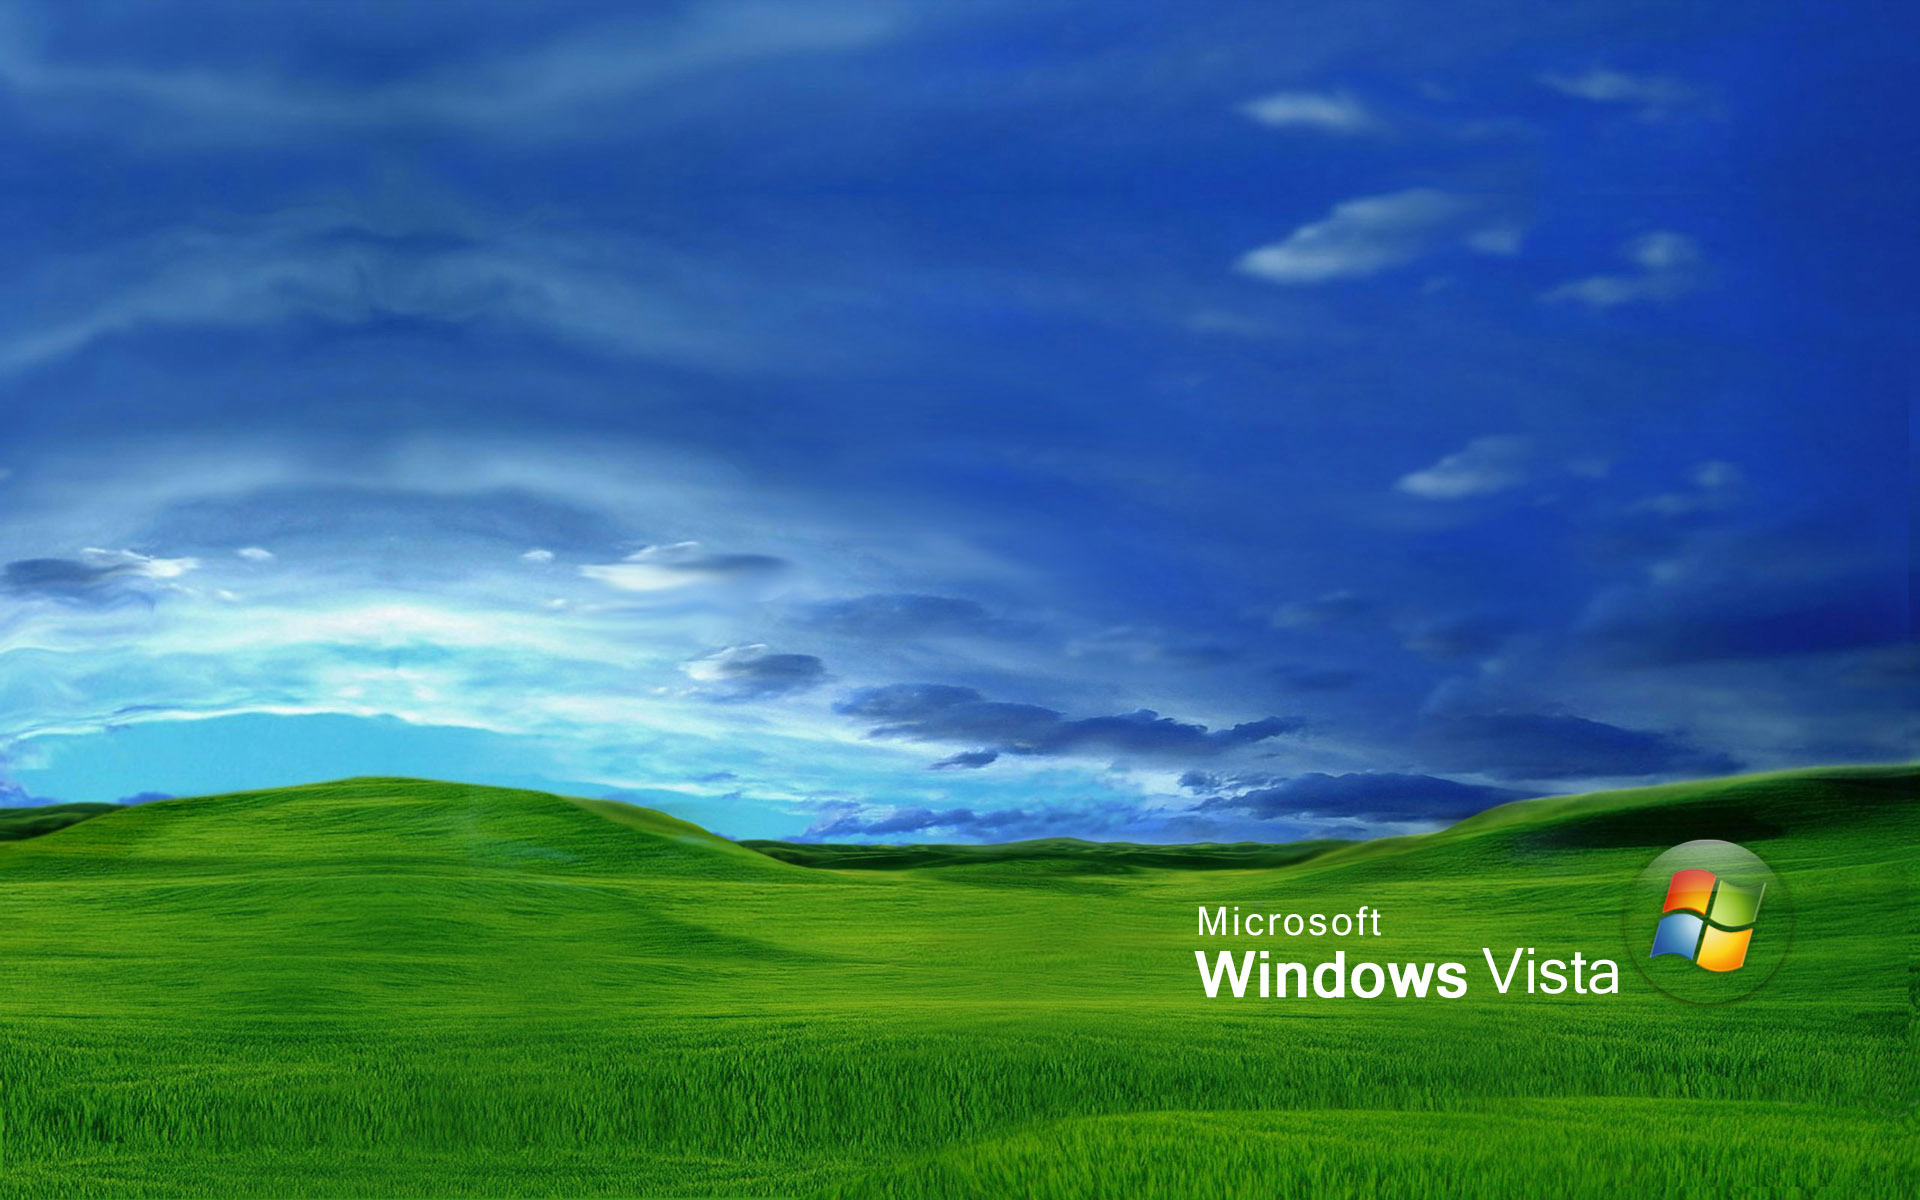 Windows Vista Wallpapers HD 1920 X 1200 38jpg Vista Wallpaper 94jpg